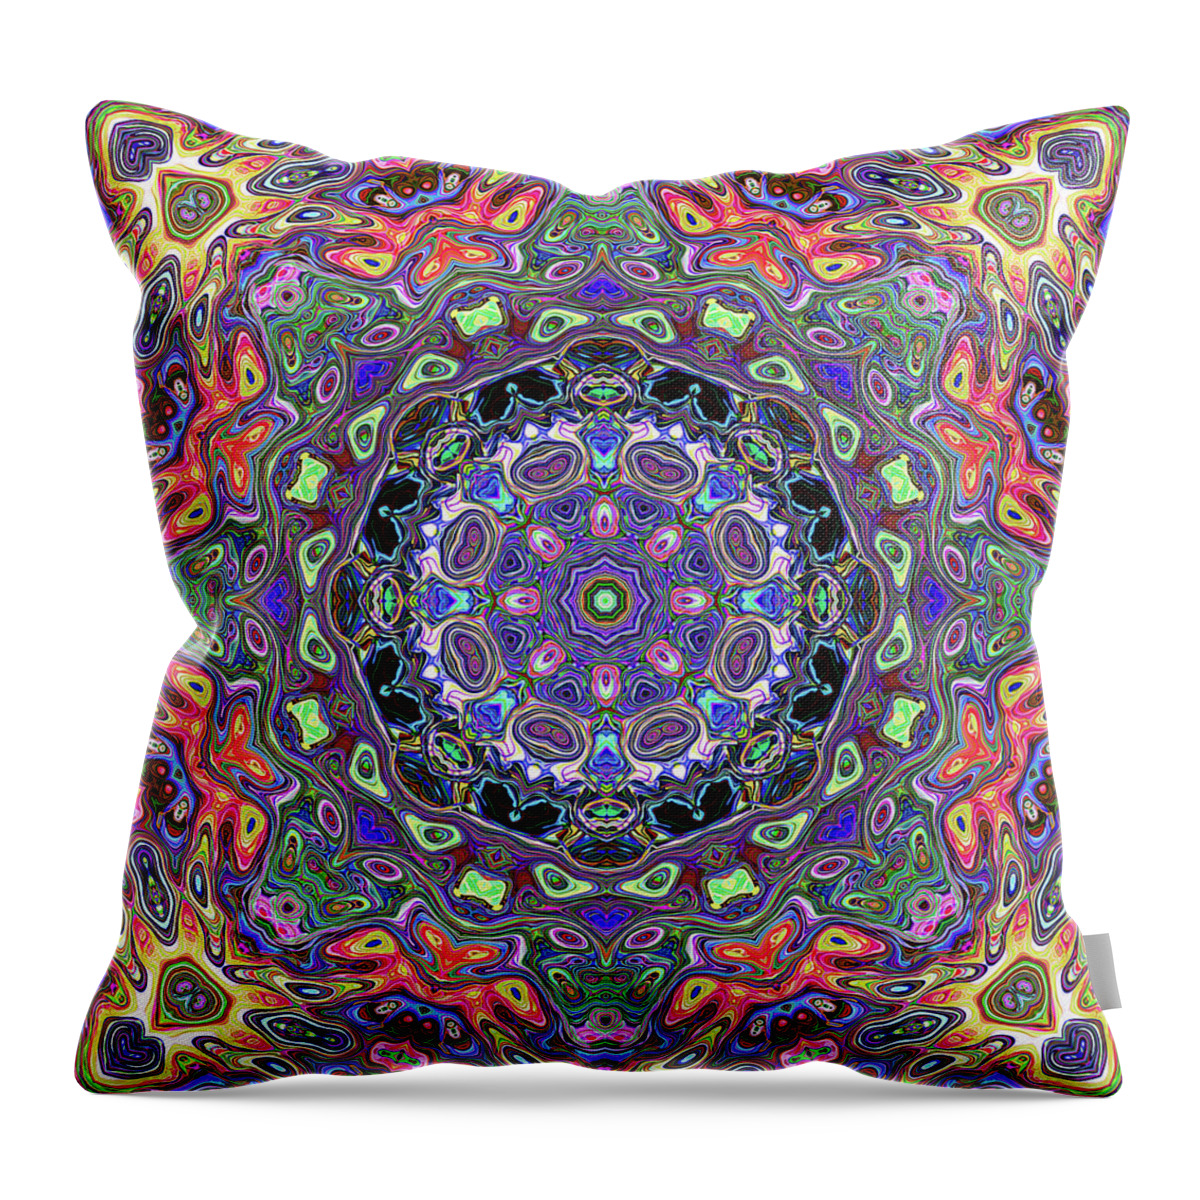 Mandala Throw Pillow featuring the digital art Colorful Mandala Abstract by Phil Perkins